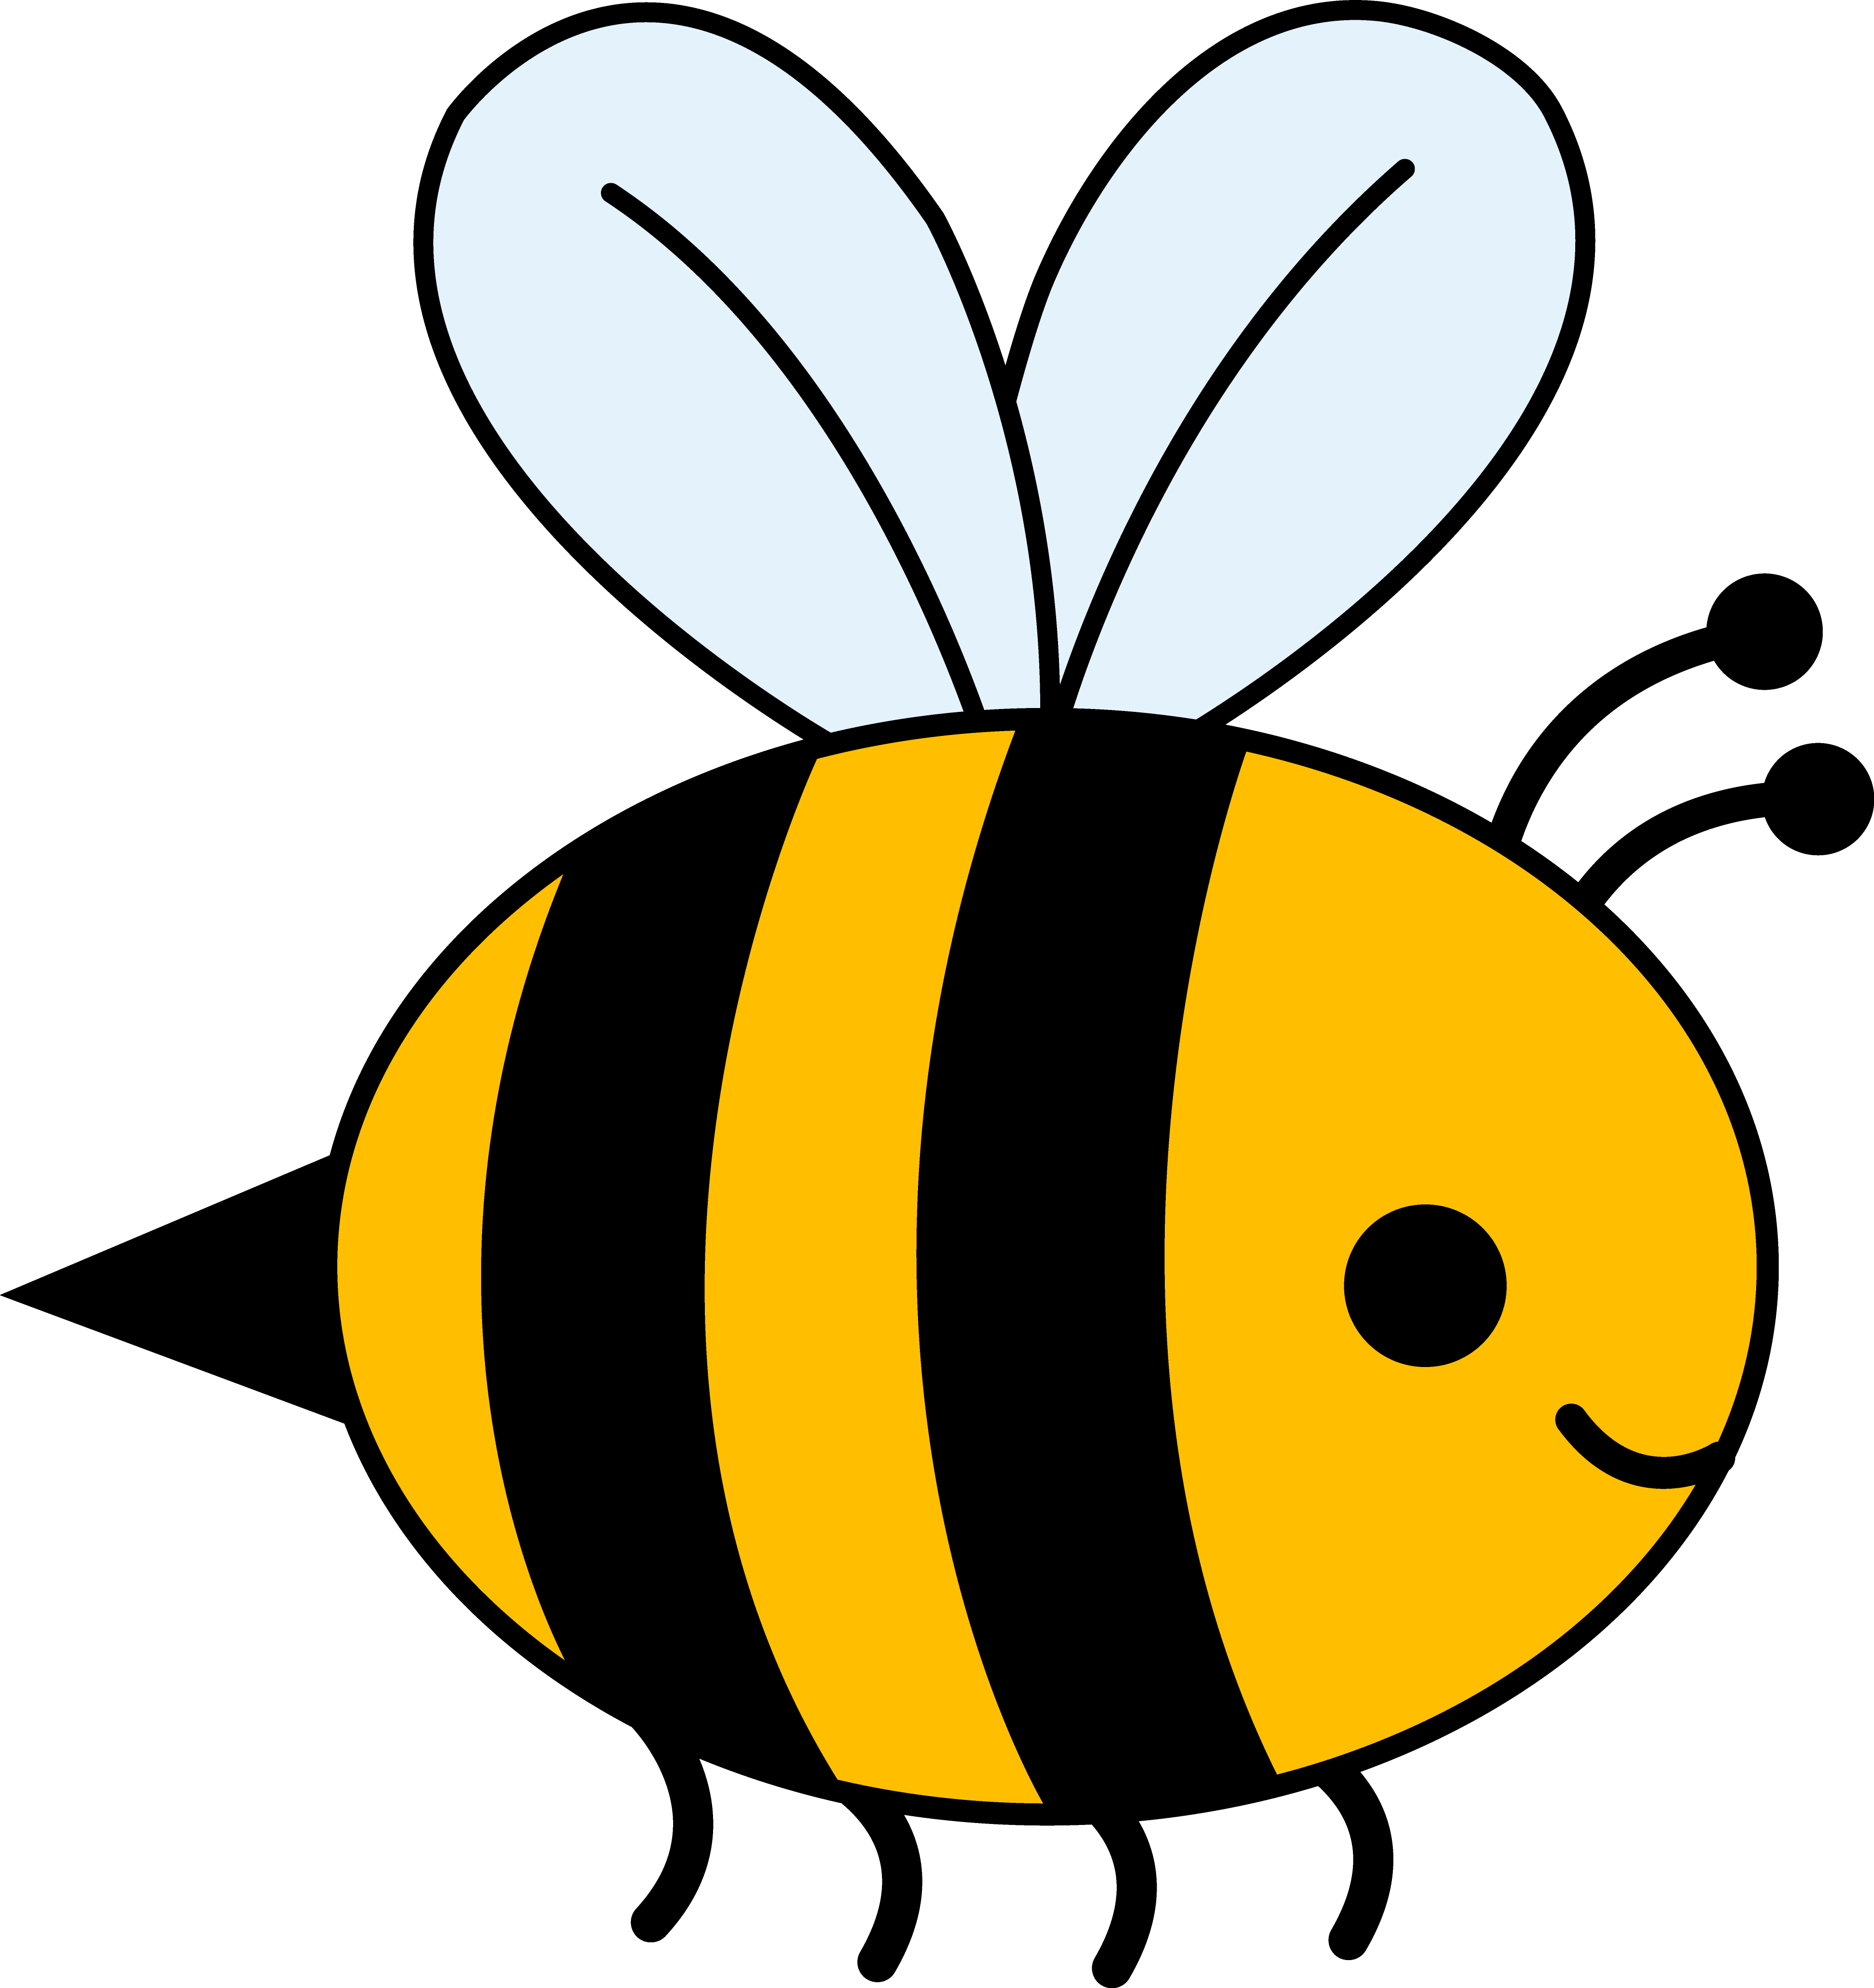 Honey bee drawing clip art